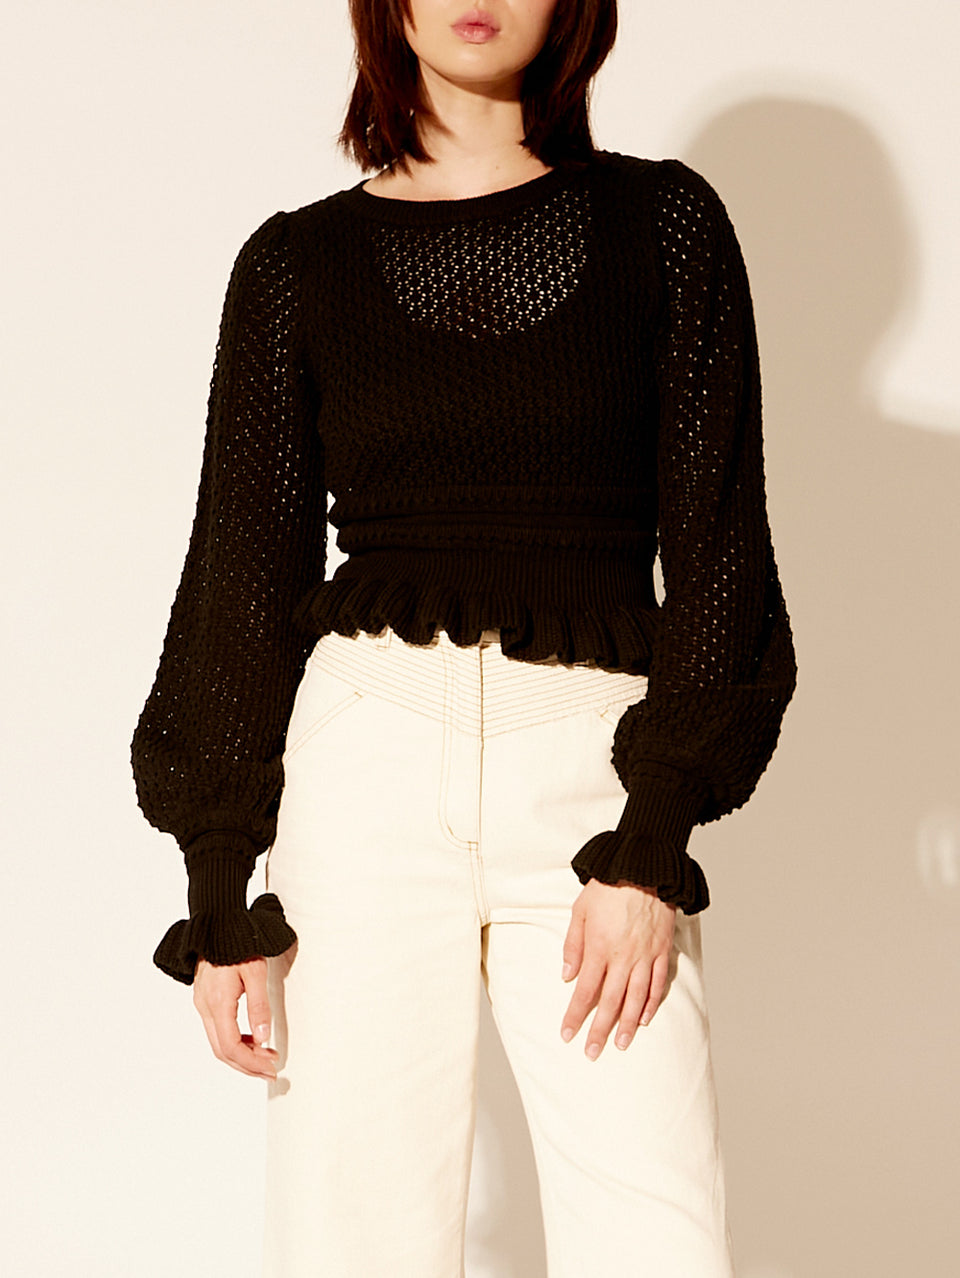 Rafaela Knit Top KIVARI | Model wears black knit top close up